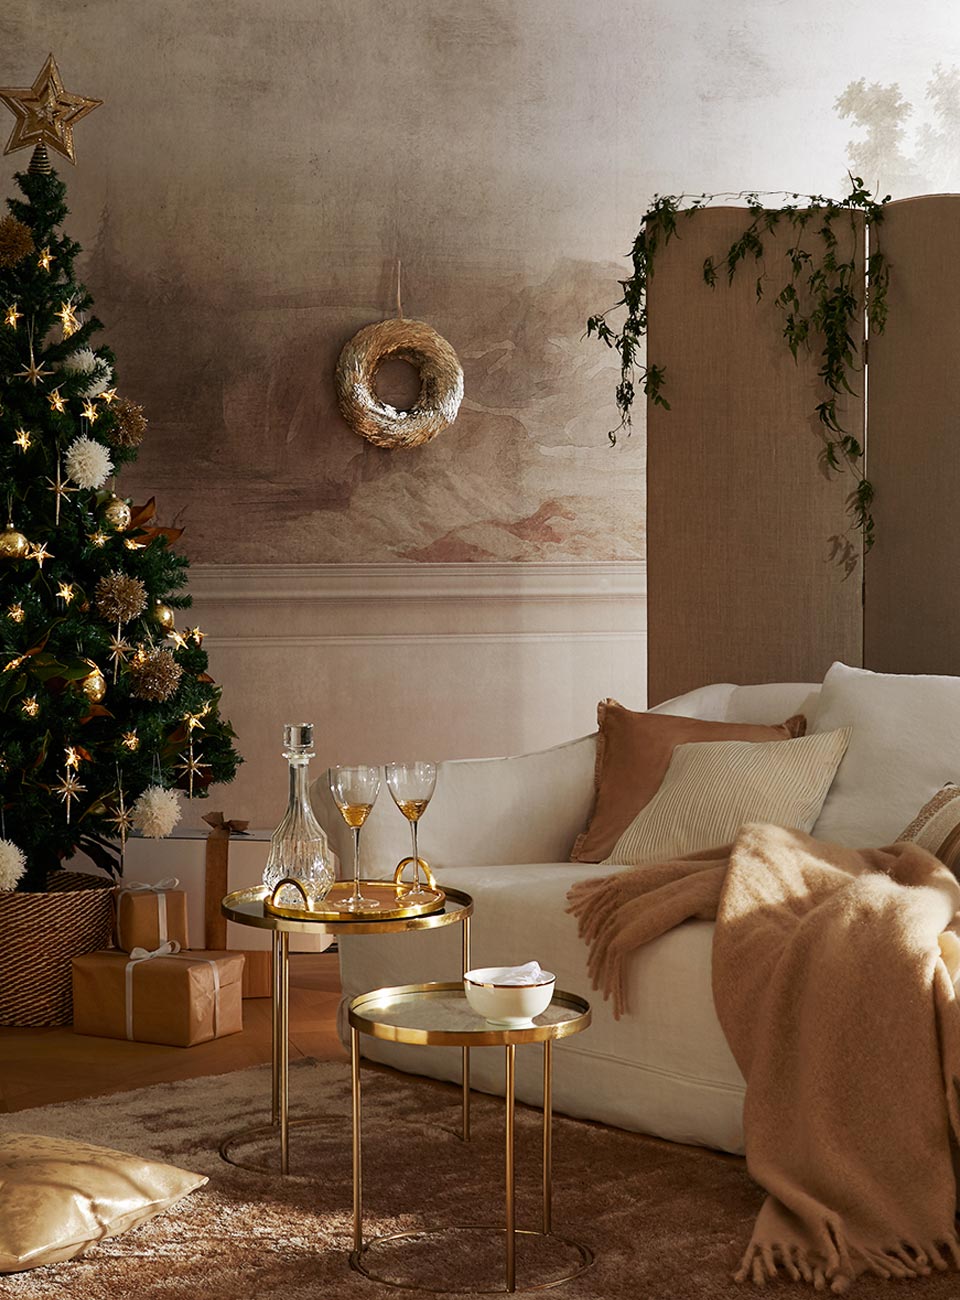 Zara Home Natale.Les Cinq Tendances Zara Home Noel 2018 Planete Deco A Homes World